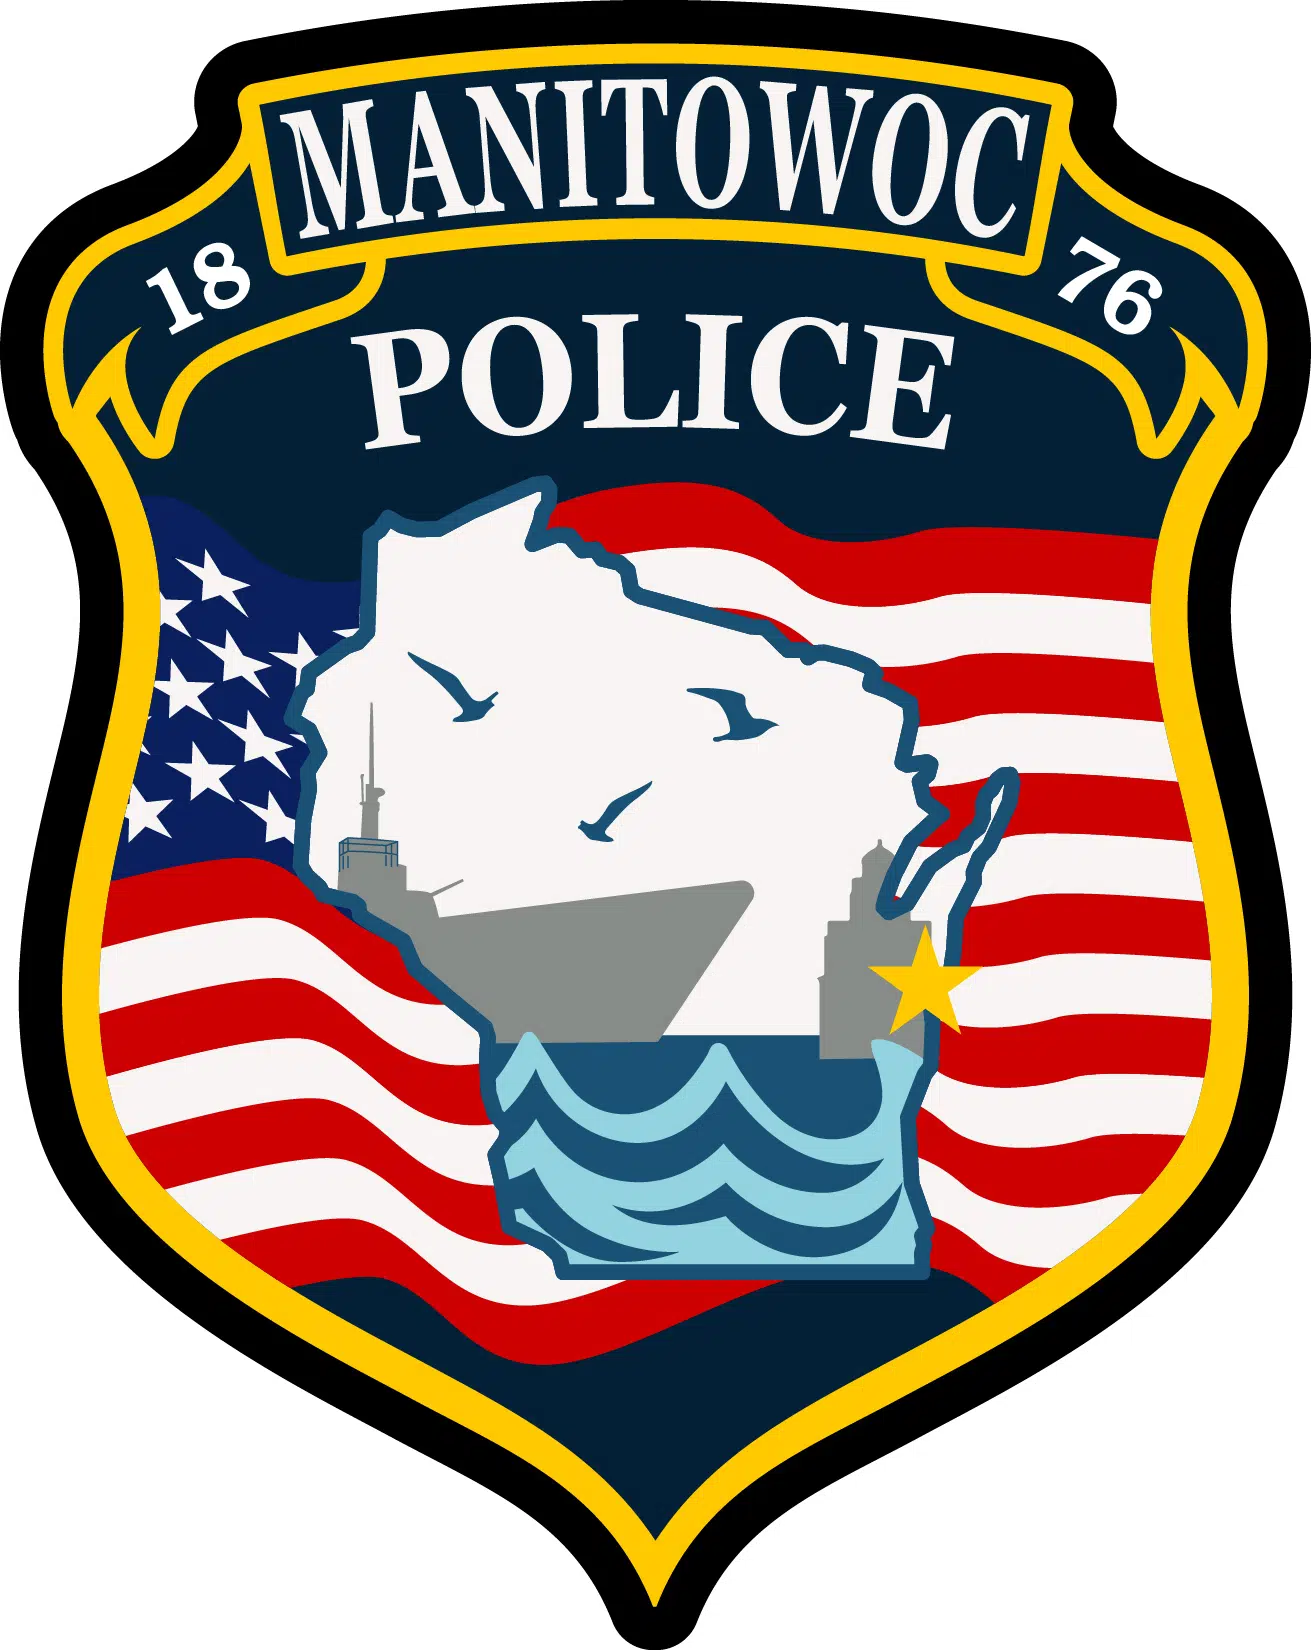 Manitowoc Police Bike Auction Next Week